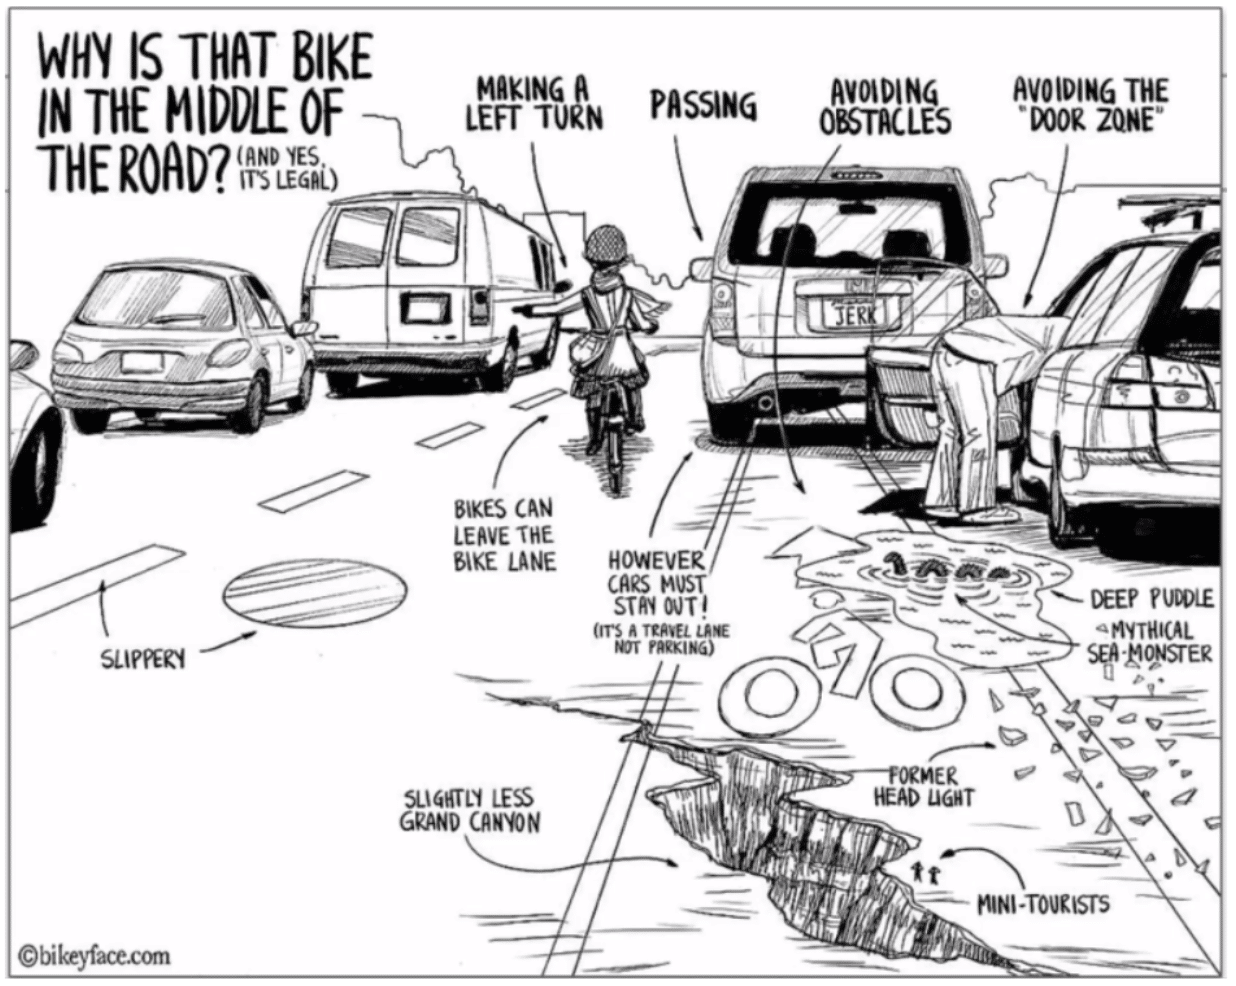 Cartoon Image of Bike Hazards